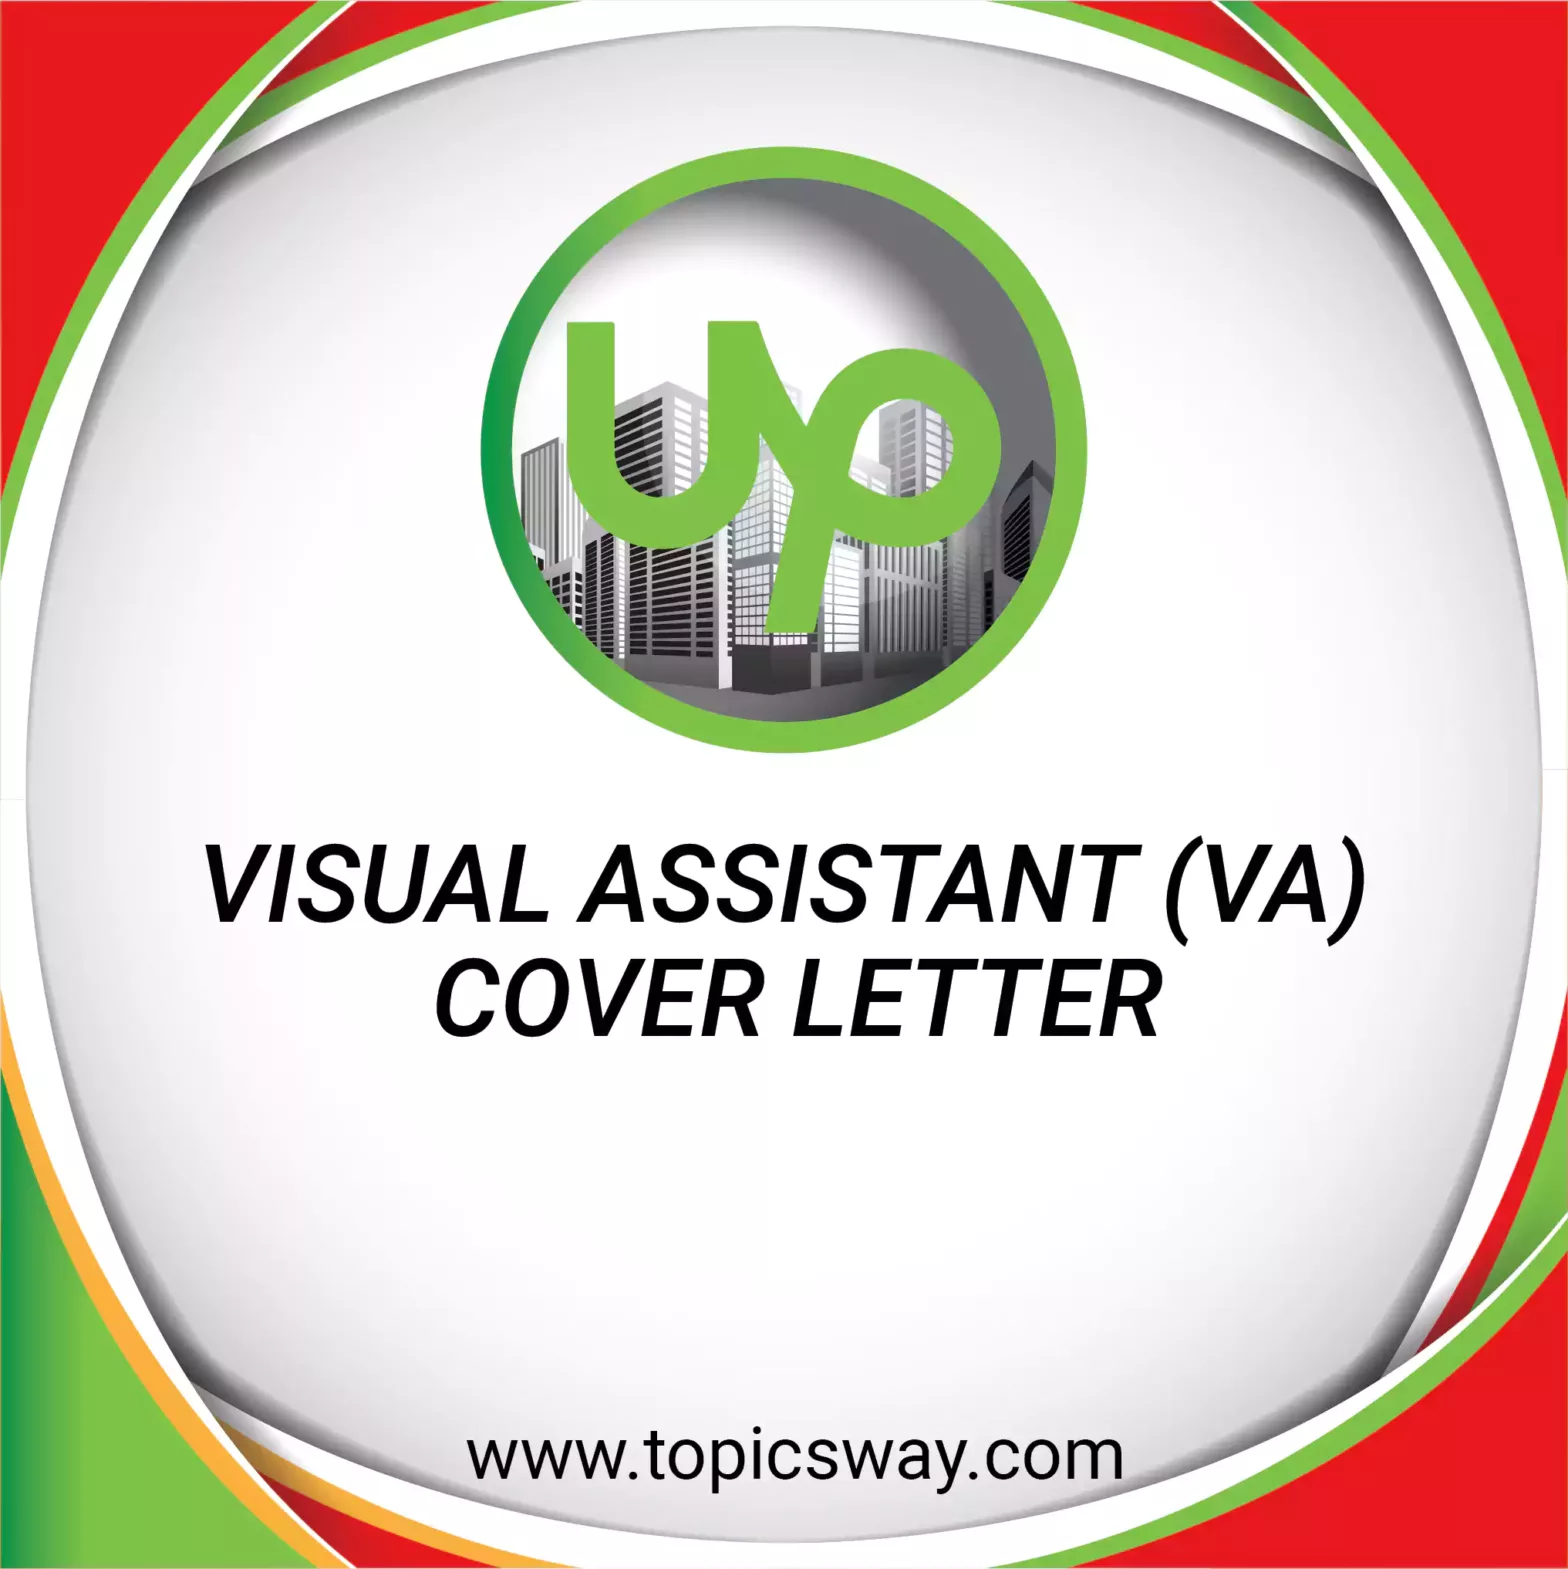 VISUAL ASSISTANT (VA) - COVER LETTER